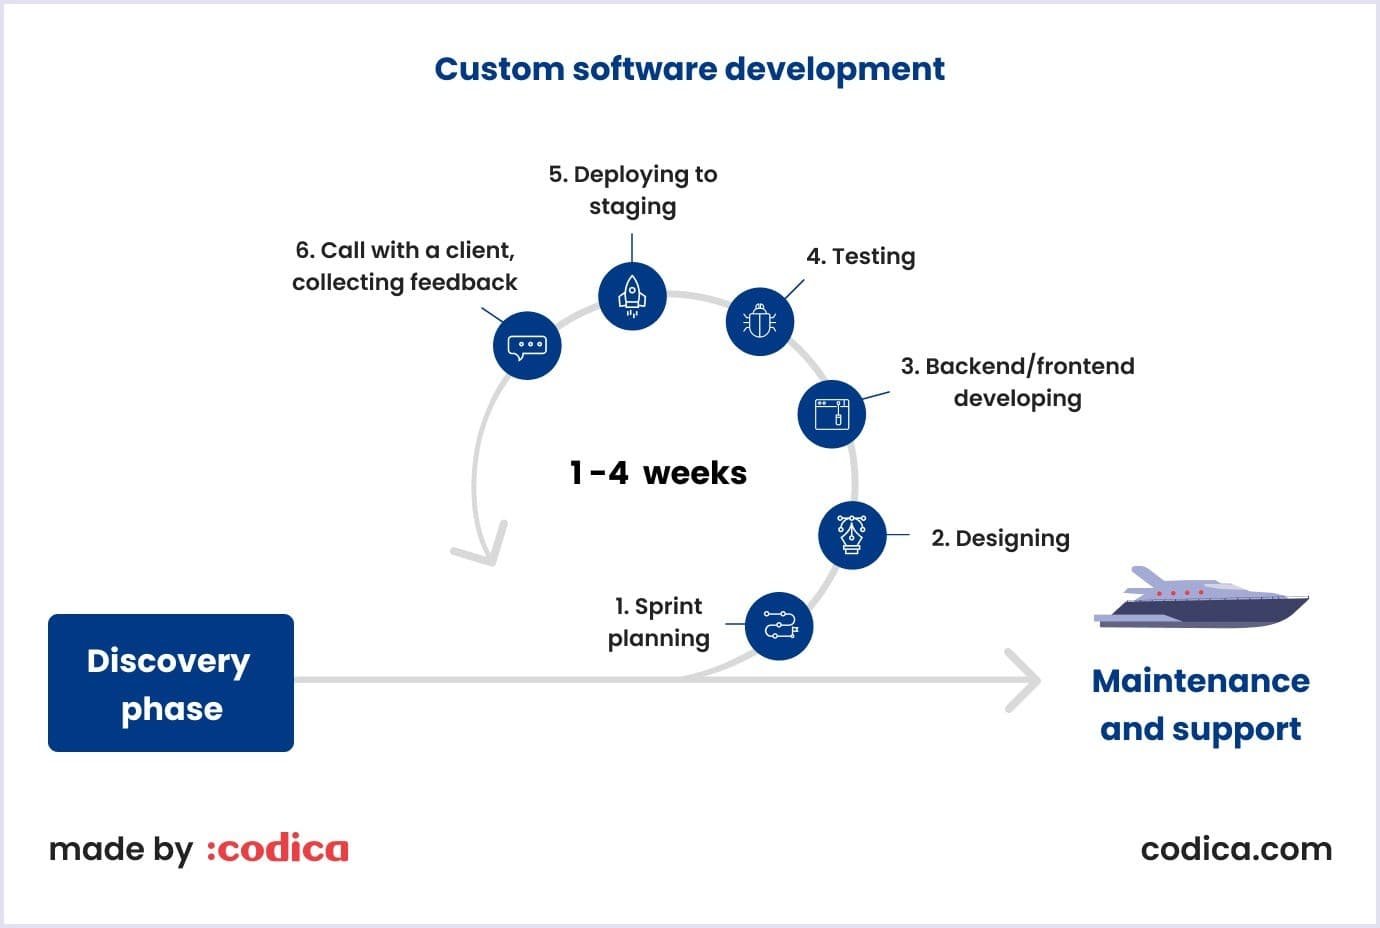 Custom software development process at Codica